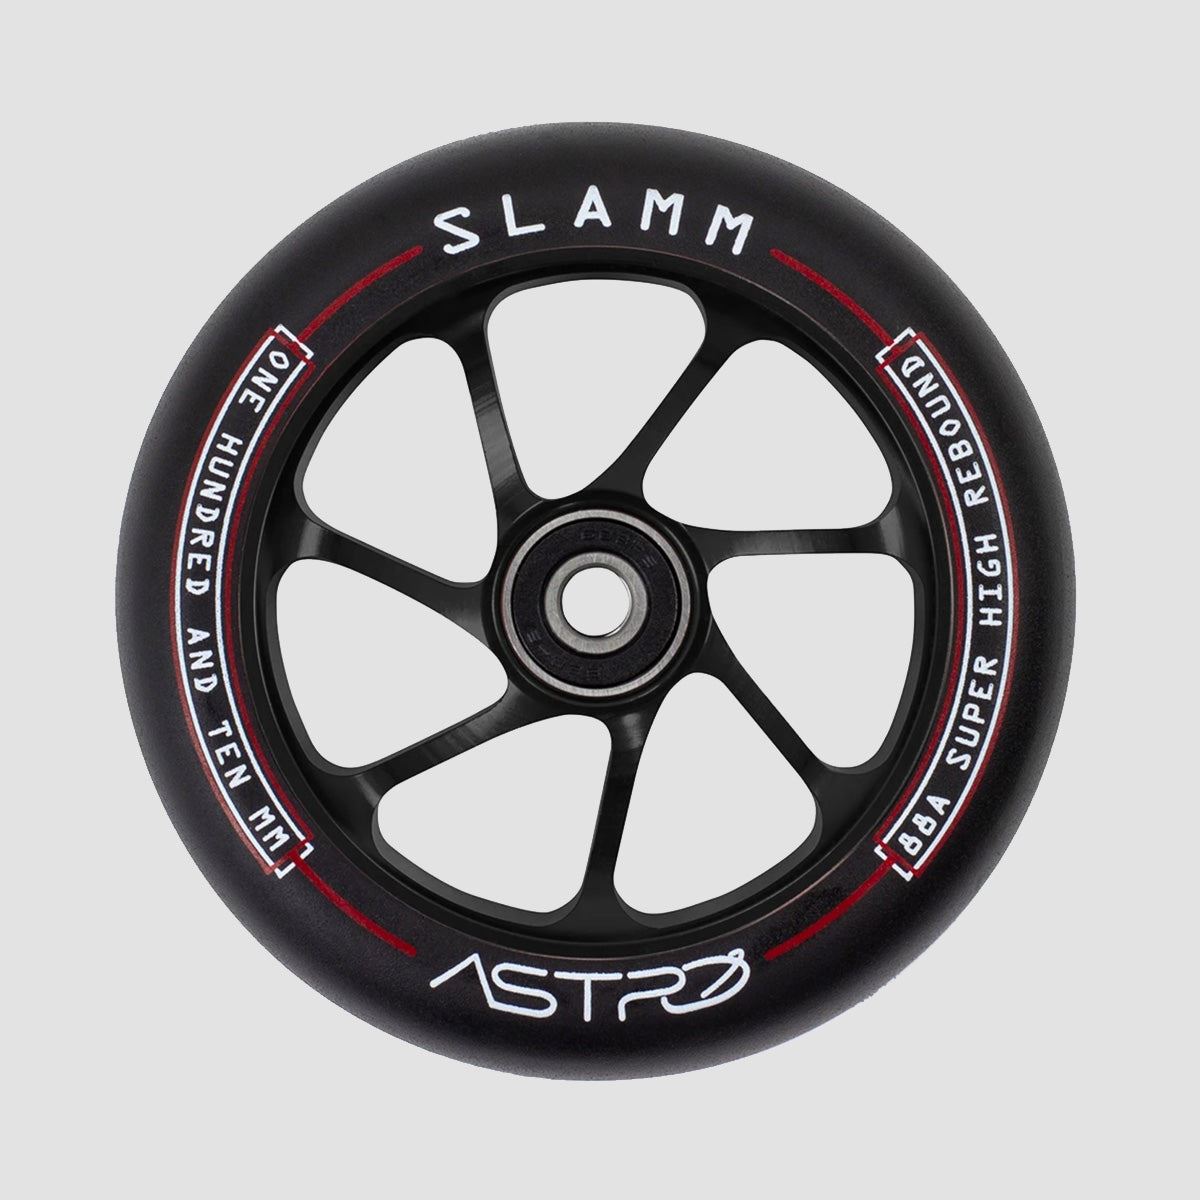 Slamm Astro Scooter Wheel x1 Black 110mm